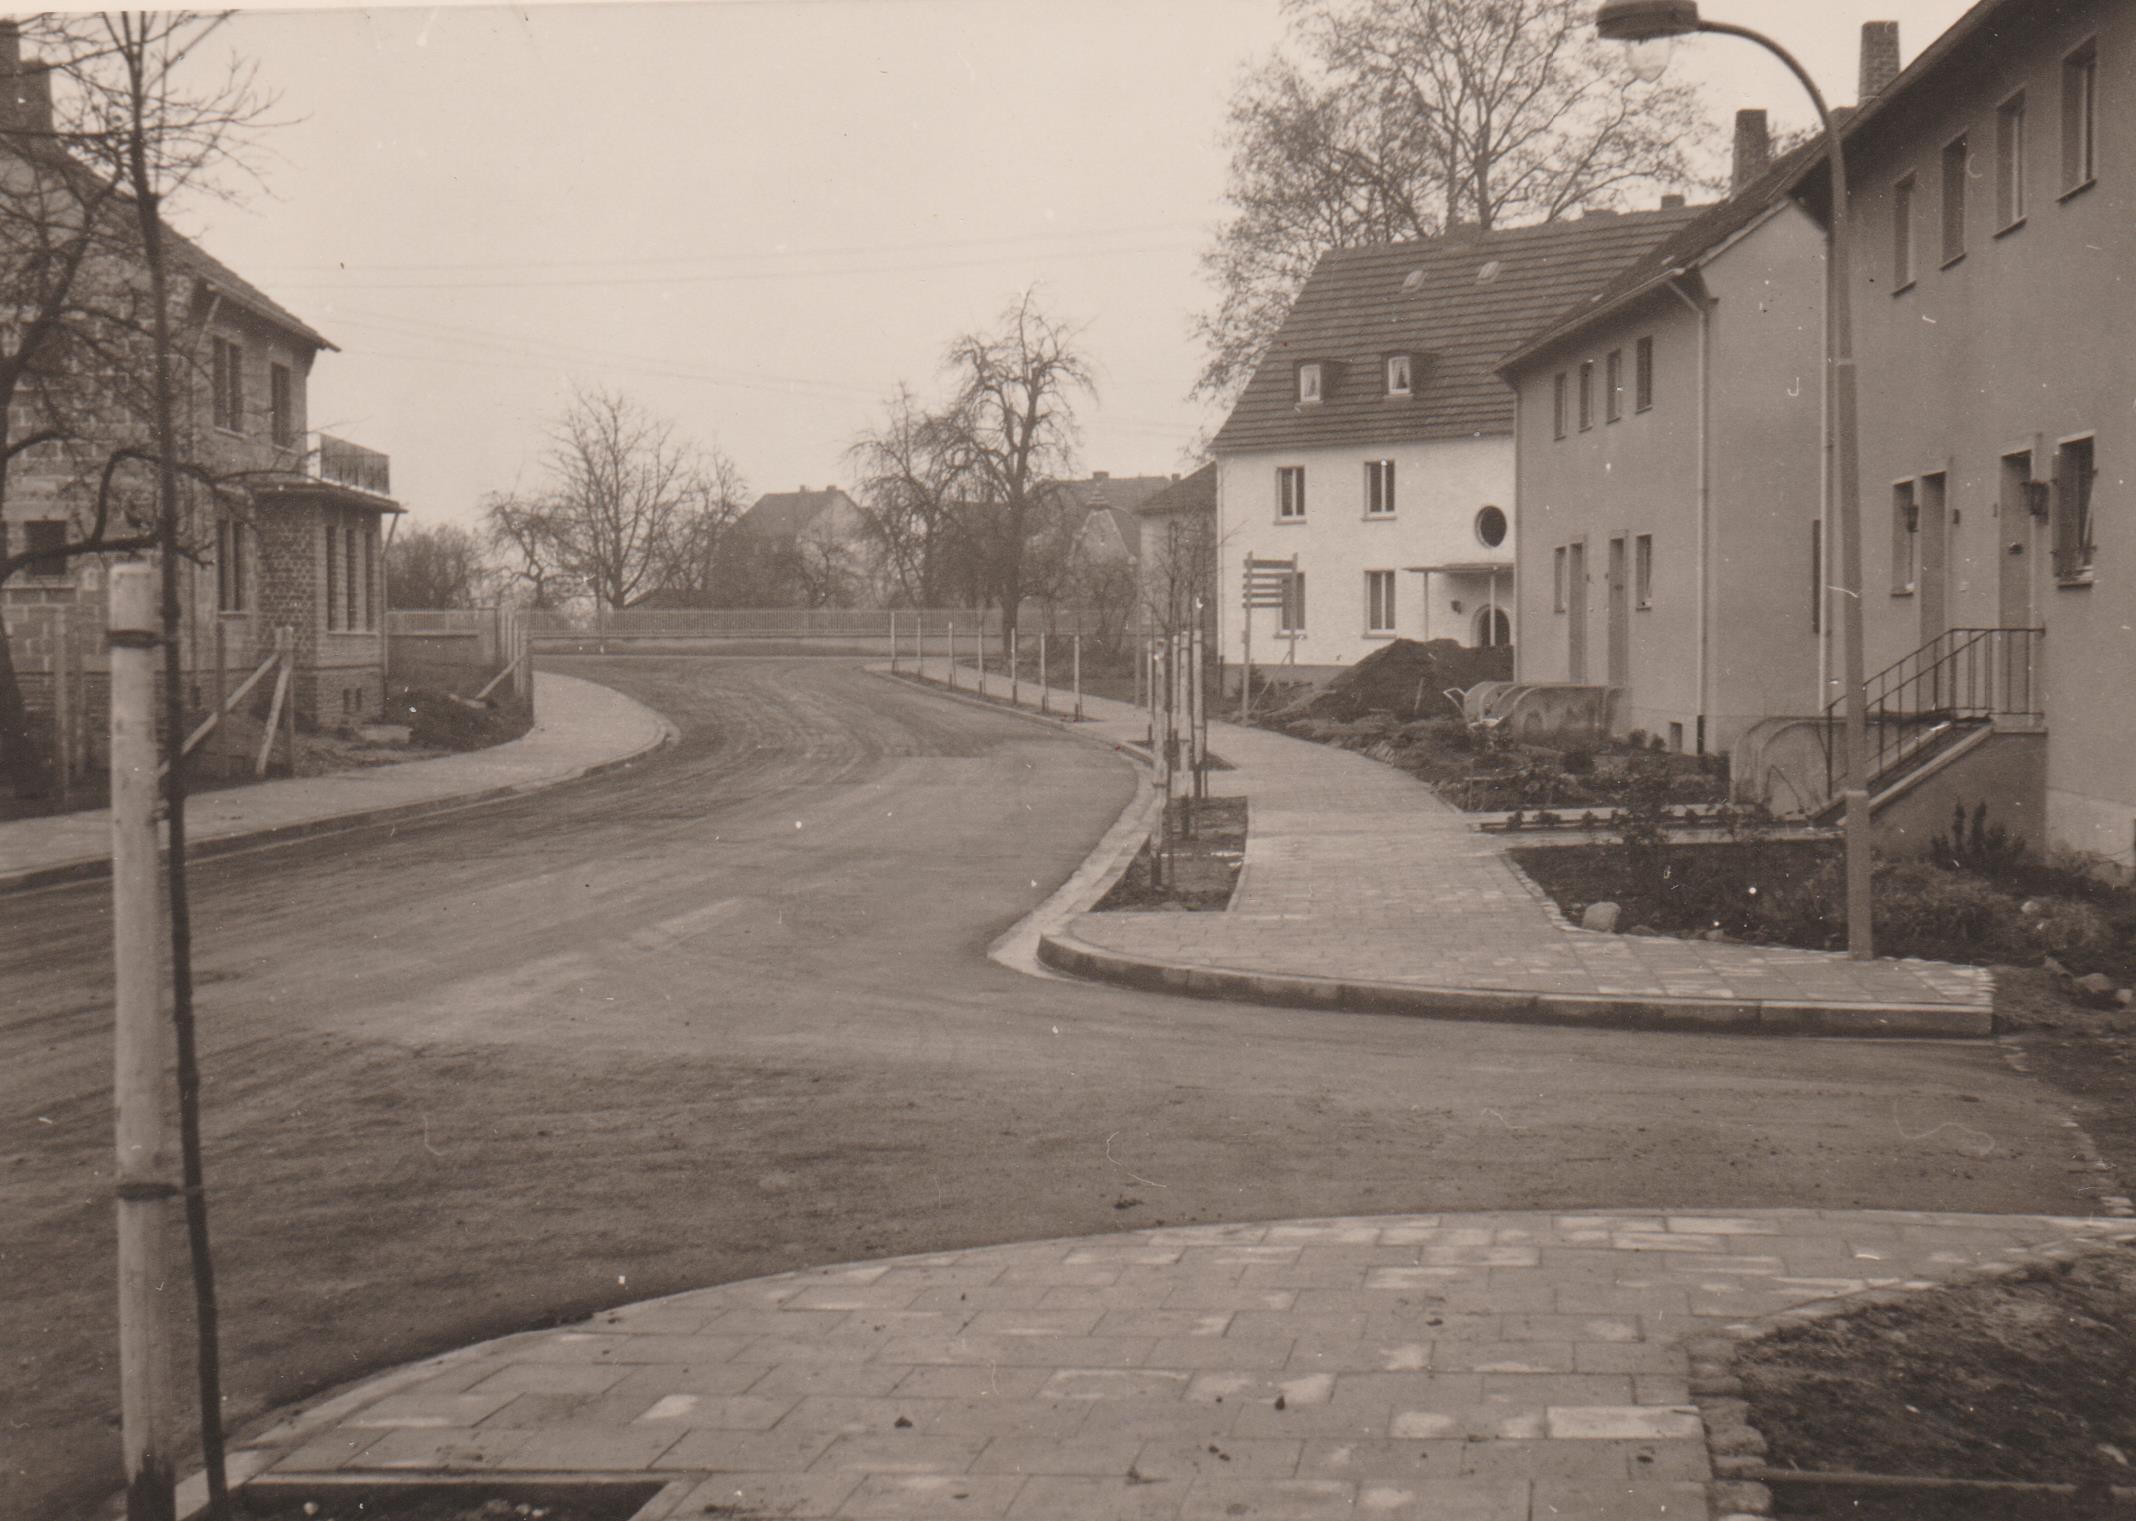 Wohngebiet Bendorf Ringstaße Ecke Hanswiesenweg, 1950er Jahre (REM CC BY-NC-SA)